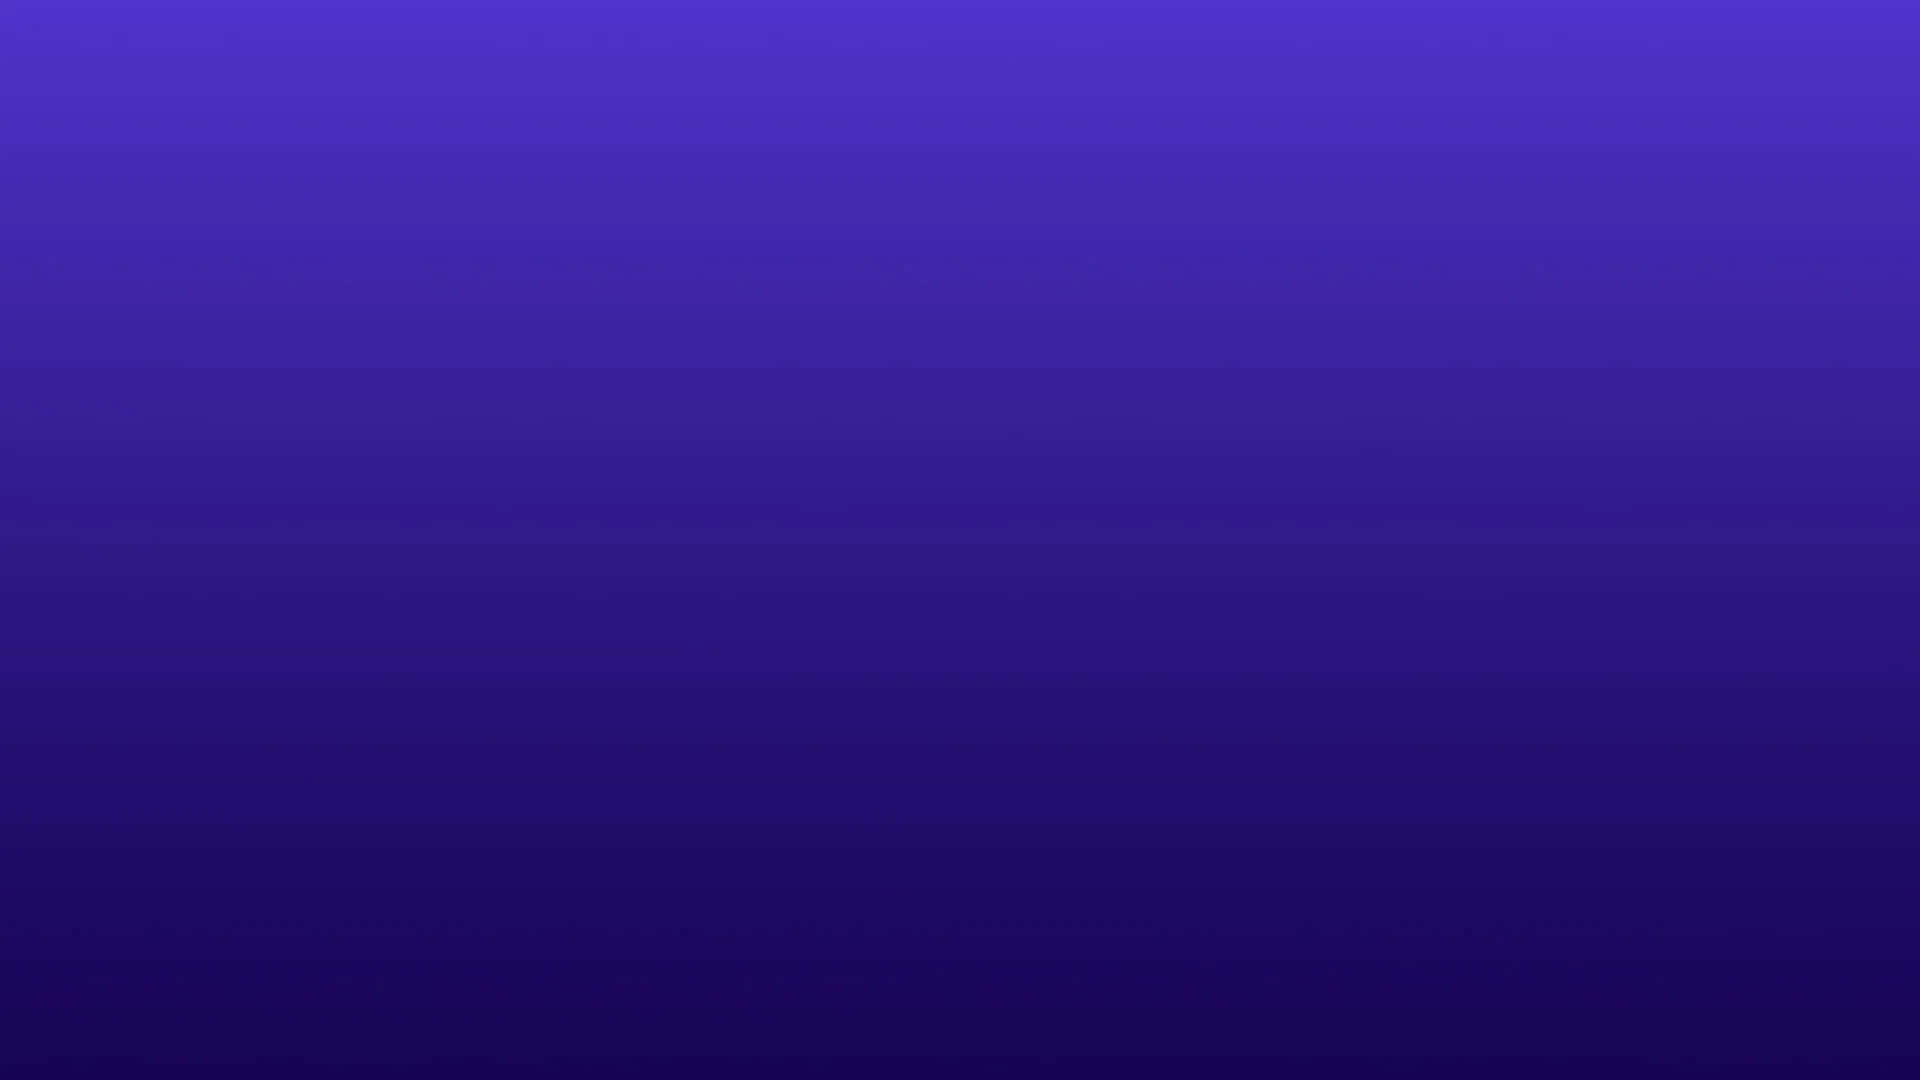 Dark Aesthetic Purple Gradient Landscape Background